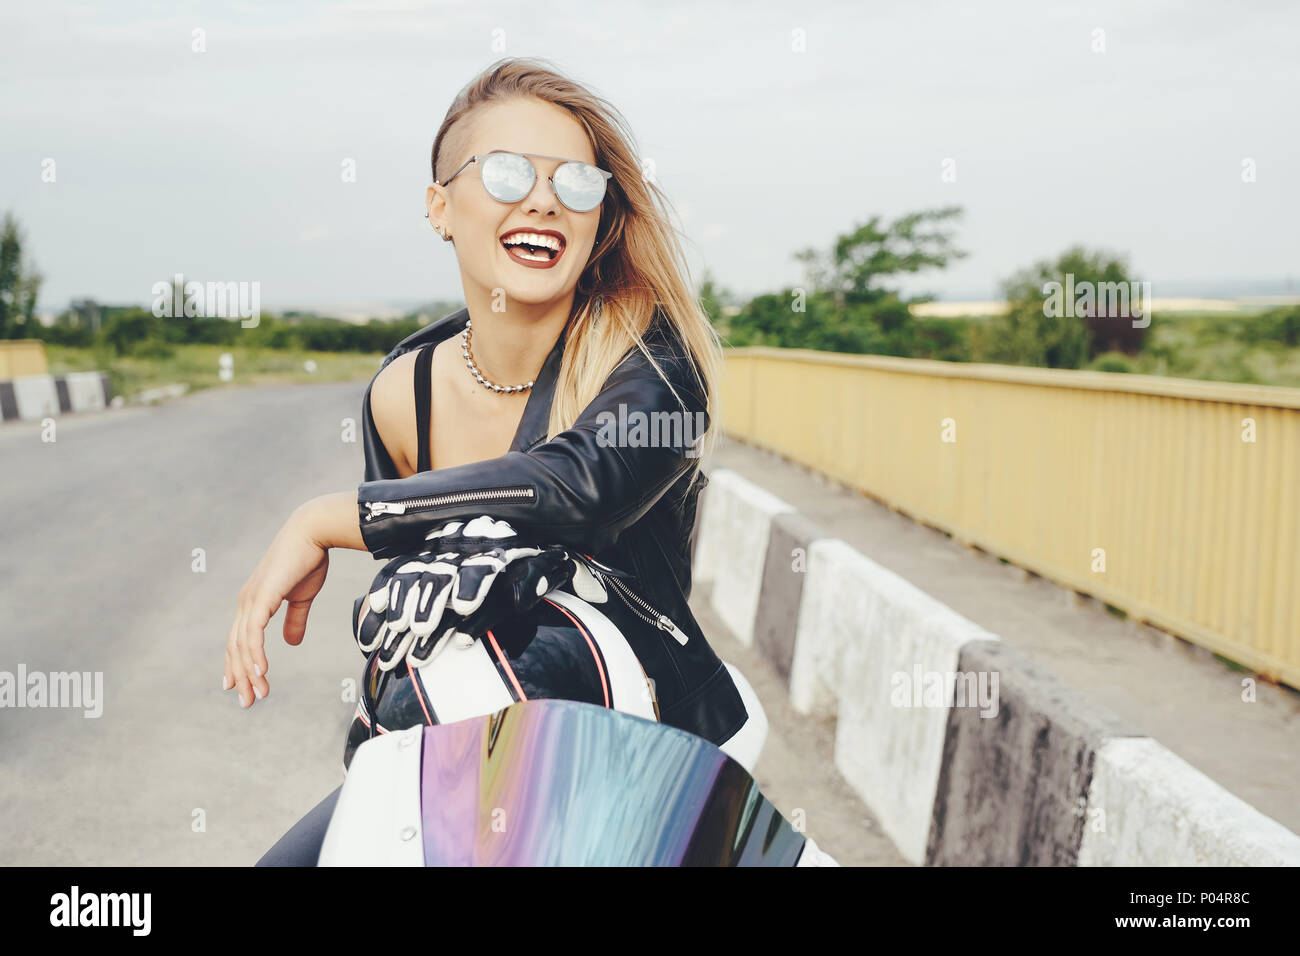 Beautiful woman posing with sunglasses on a motorbike Stock Photo